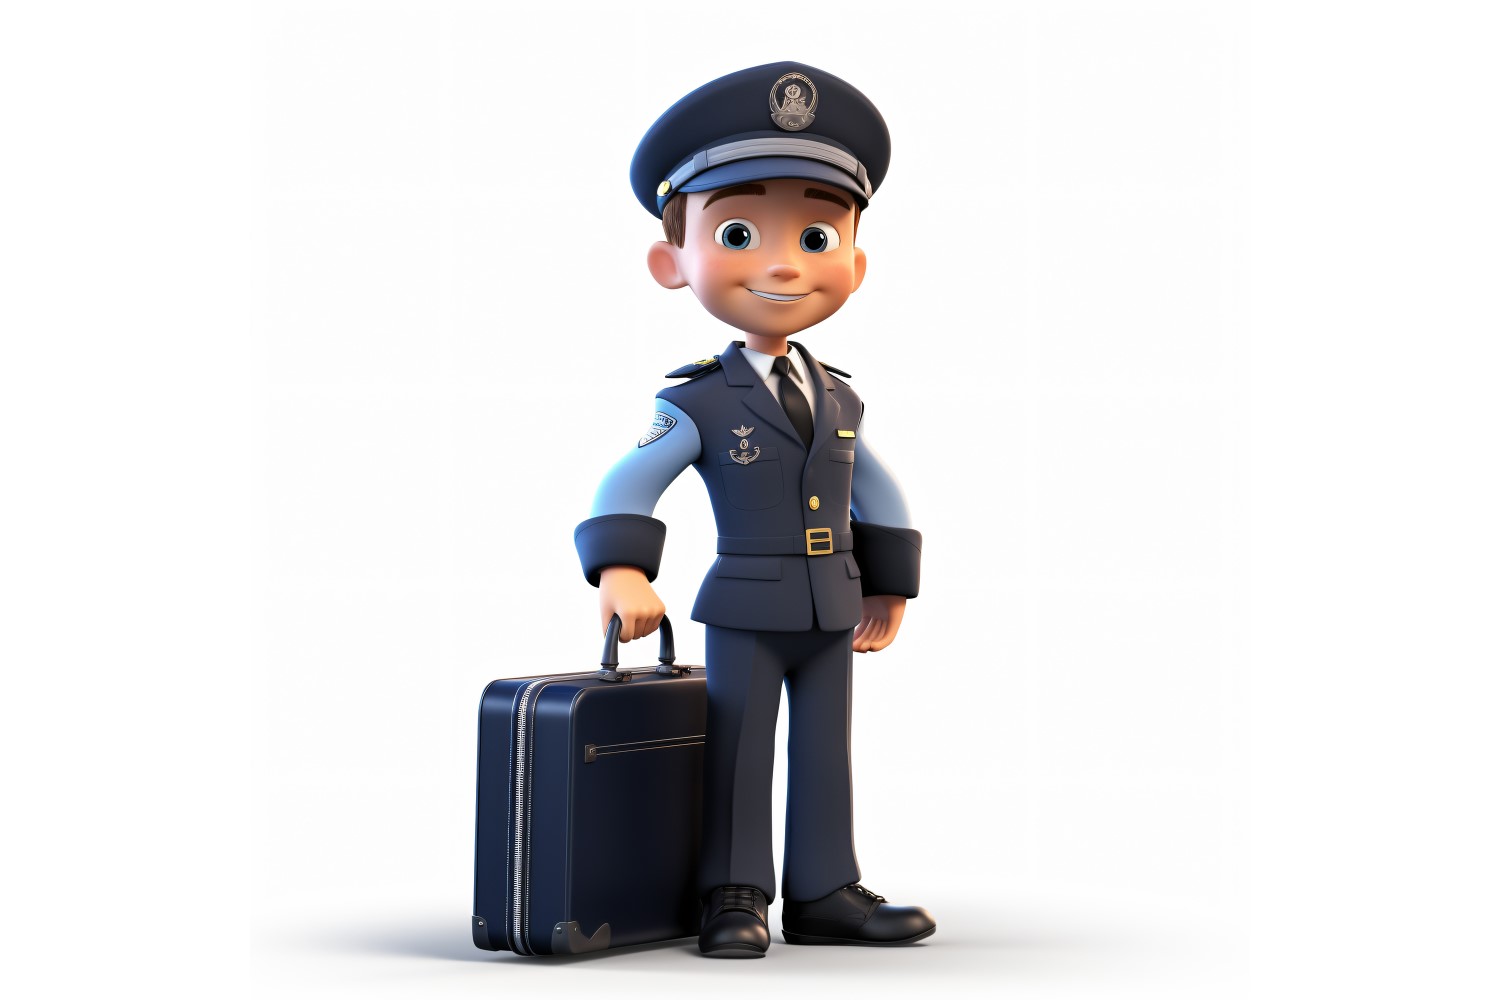 3D Pixar Character Child Boy Pilot with relevant environment 3